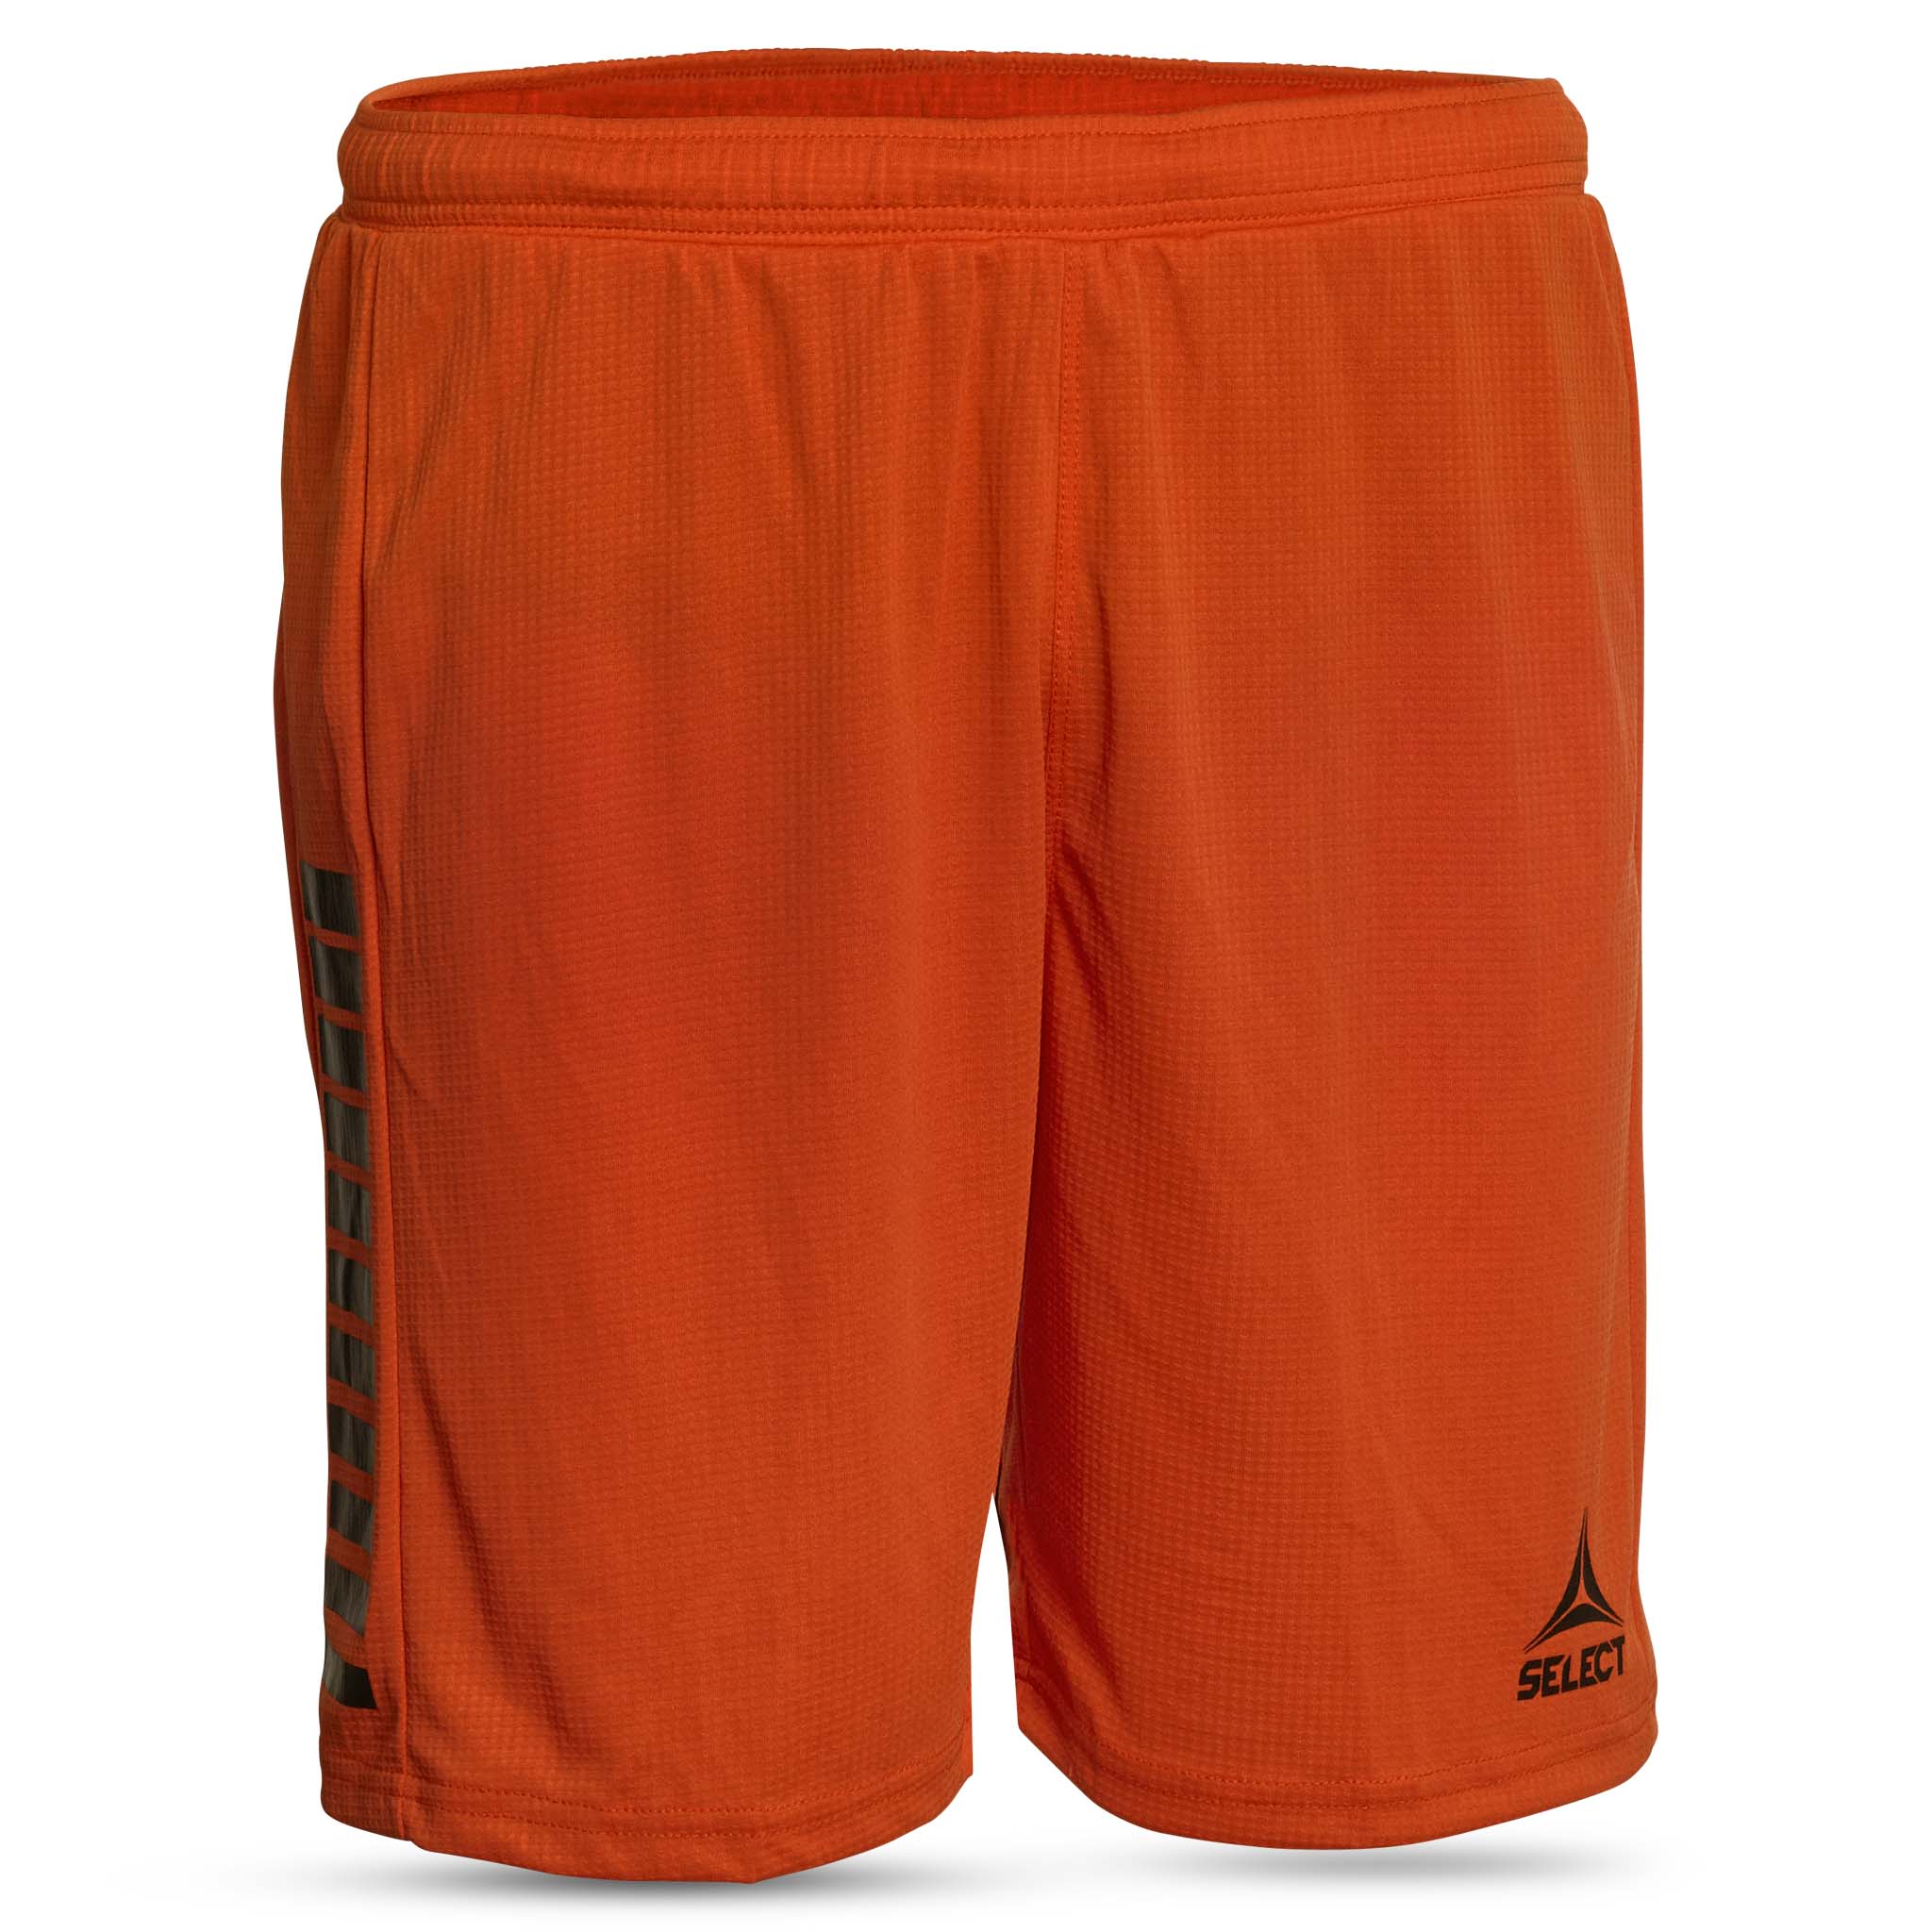 Goalkeeper shorts - Monaco #colour_red